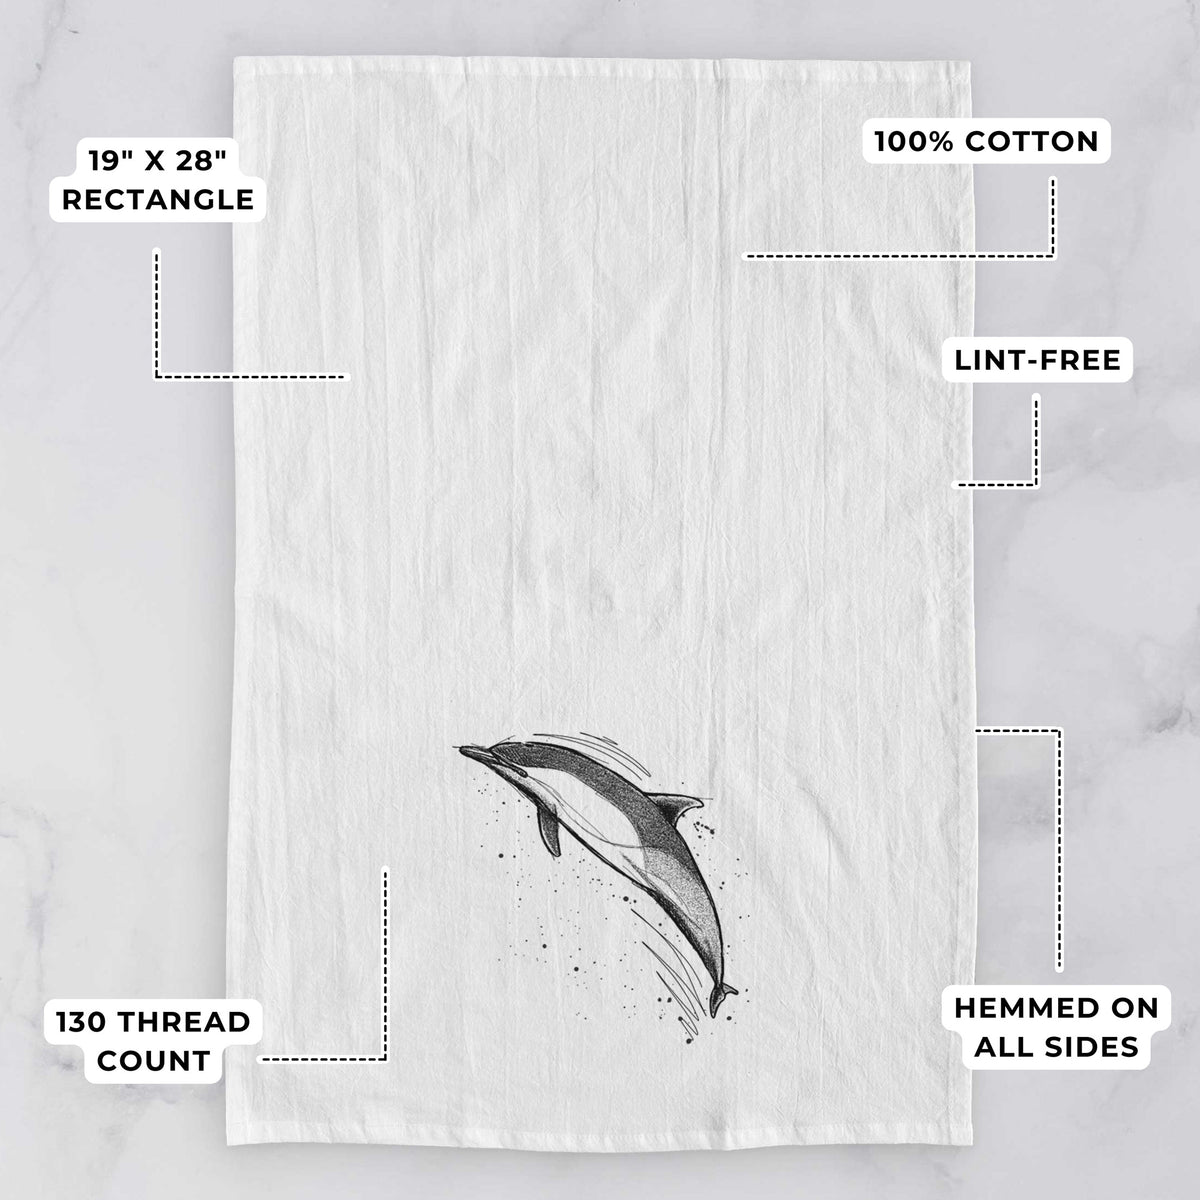 Short-Beaked Common Dolphin - Delphinus delphis Tea Towel